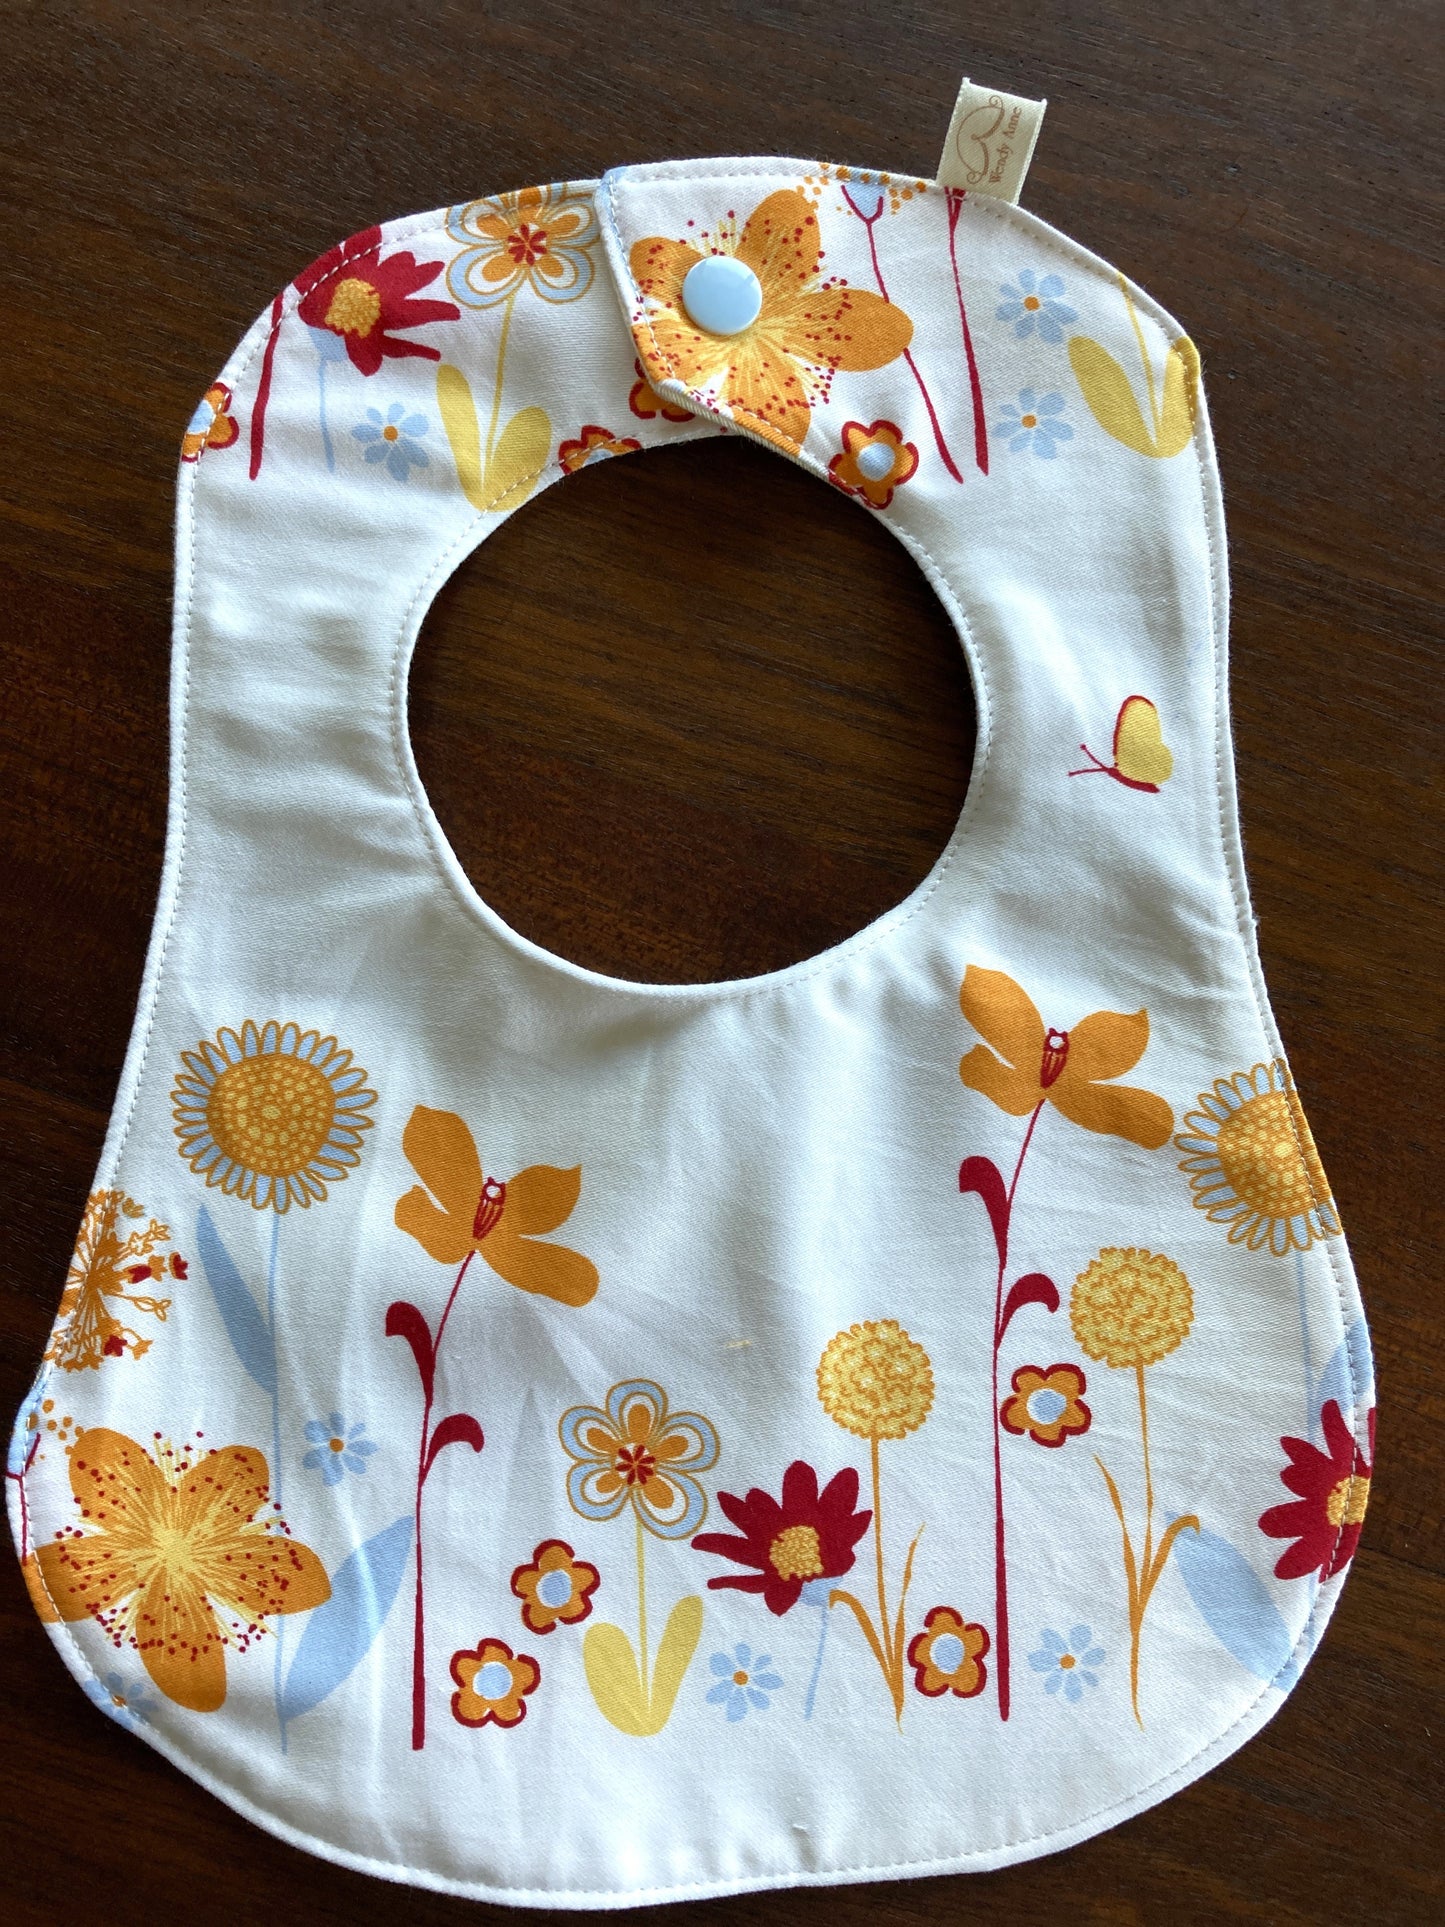 Baby Bib, 2 Burp Cloth and Teether Gift Set - 10 Flowers by Harmony Arts Organic Cotton